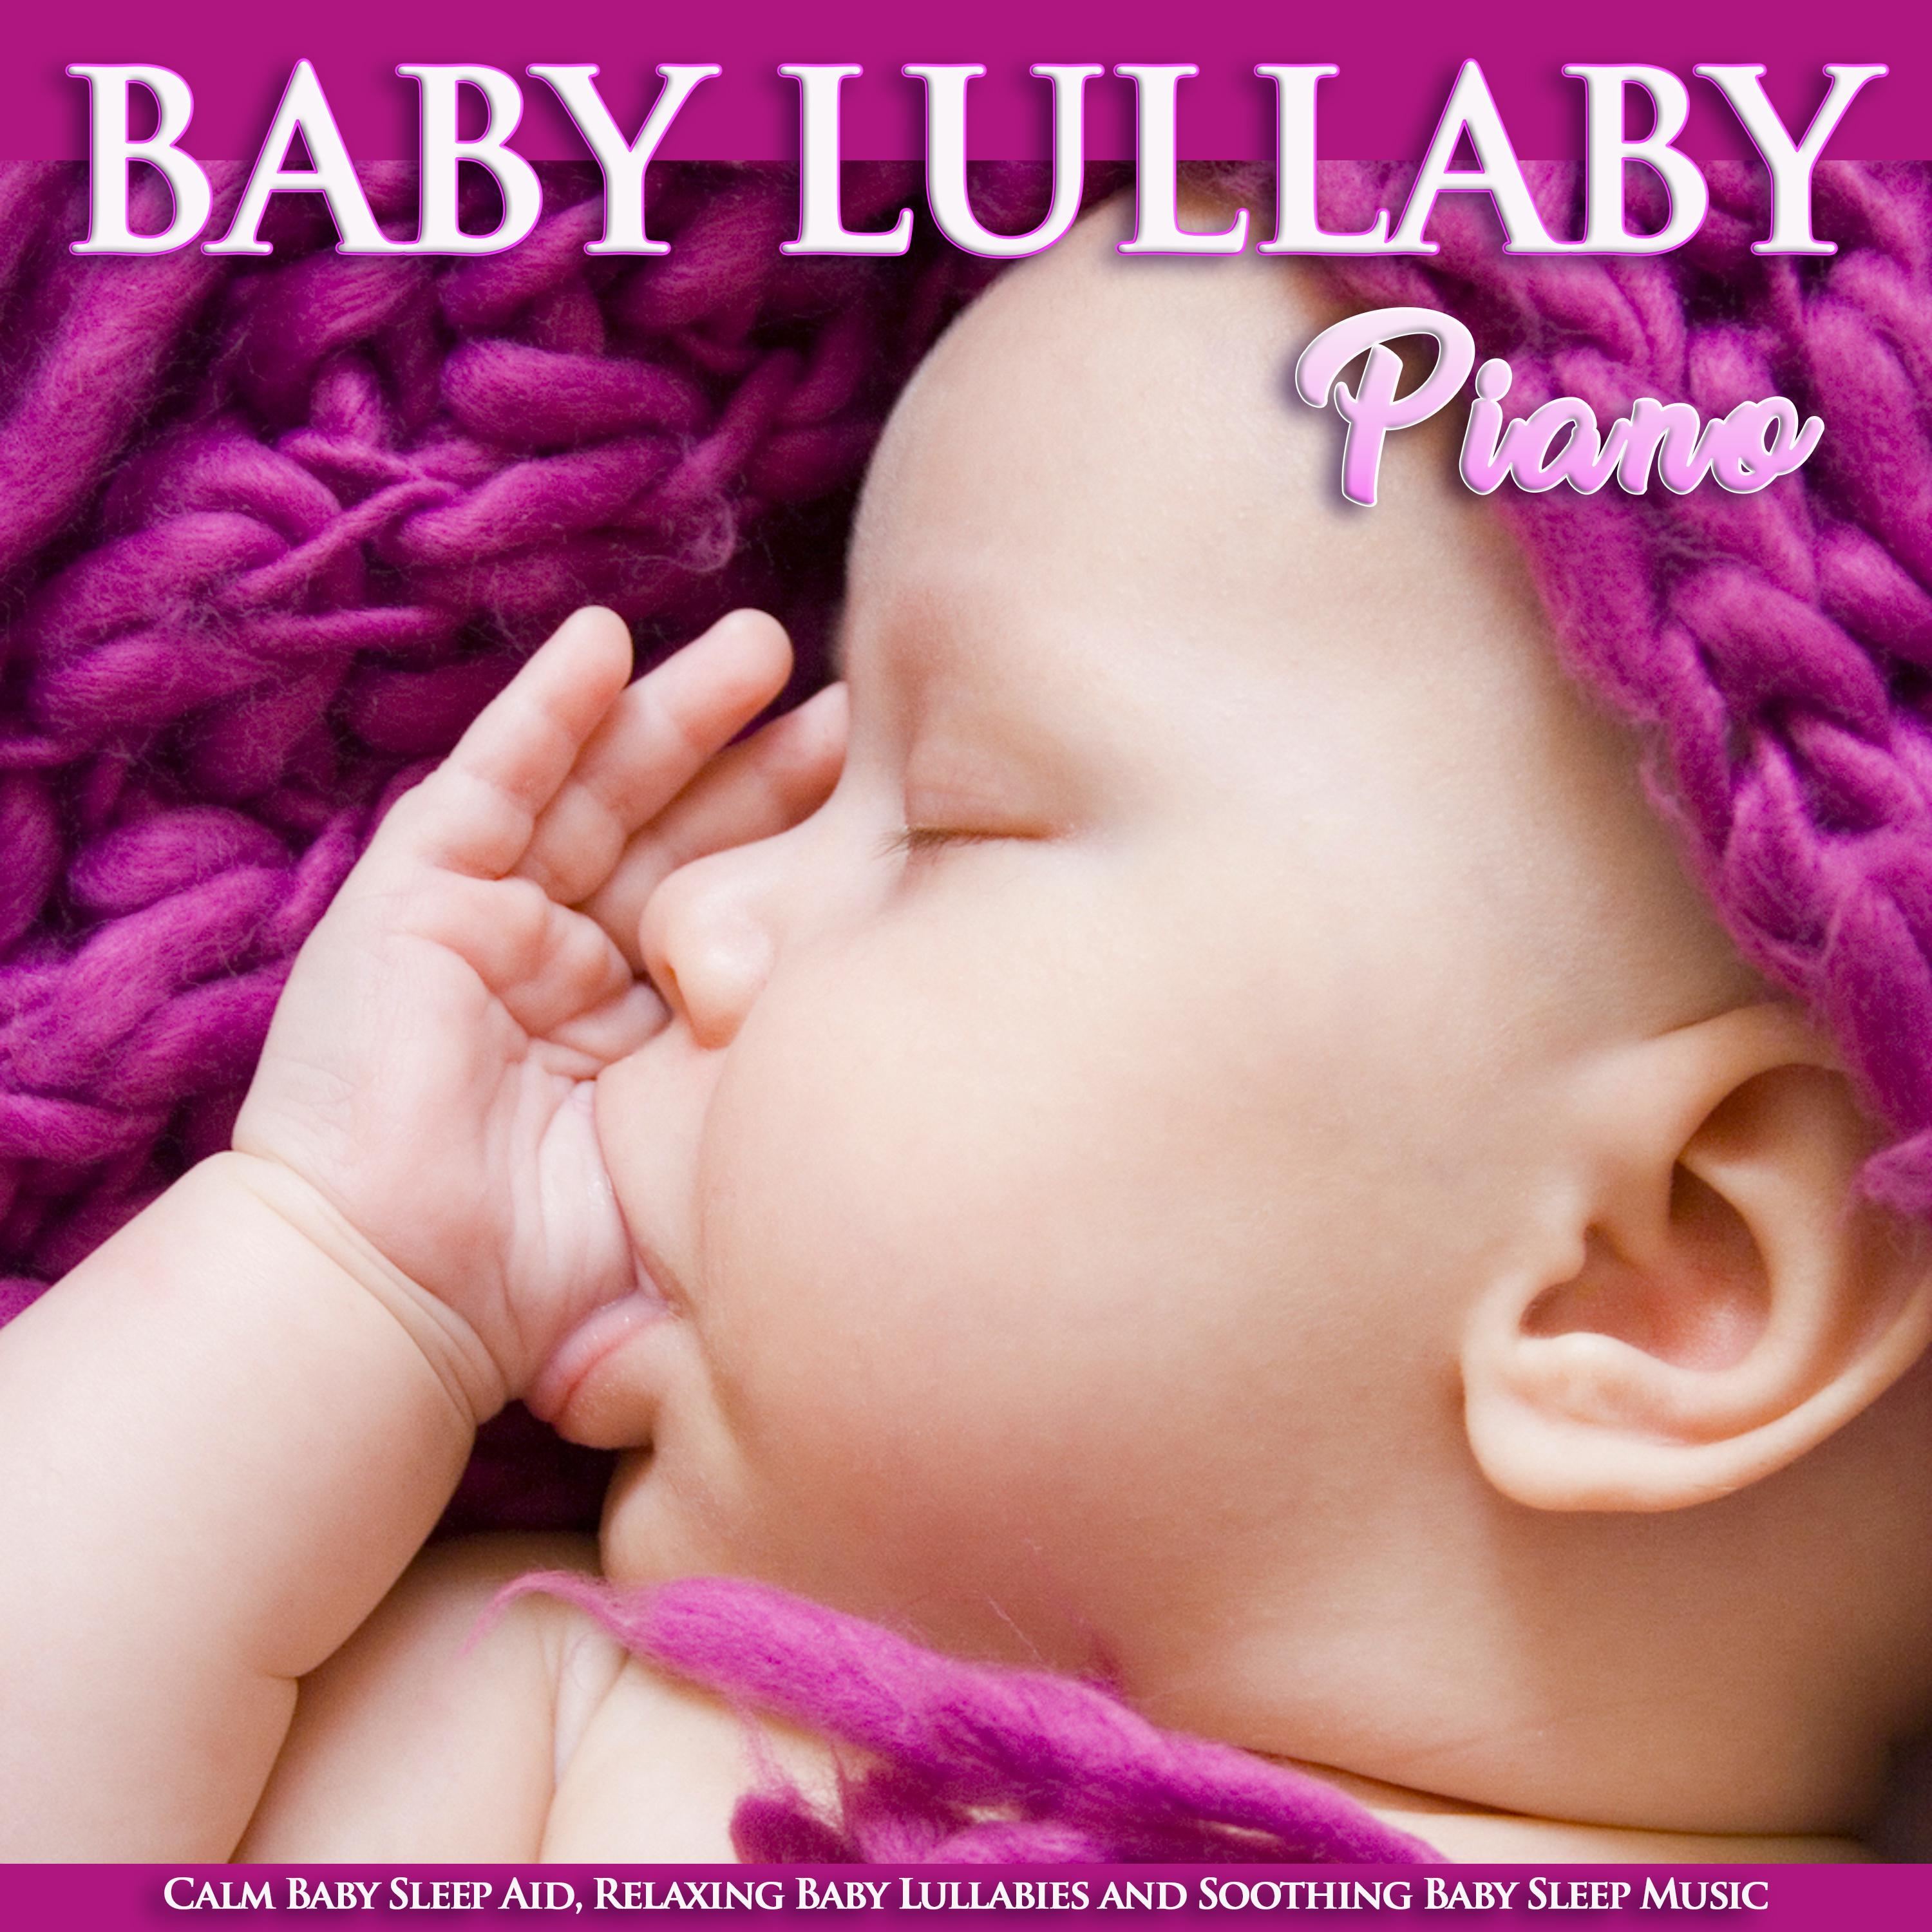 Baby Lullaby Piano: Calm Baby Sleep Aid, Relaxing Baby Lullabies and Soothing Baby Sleep Music